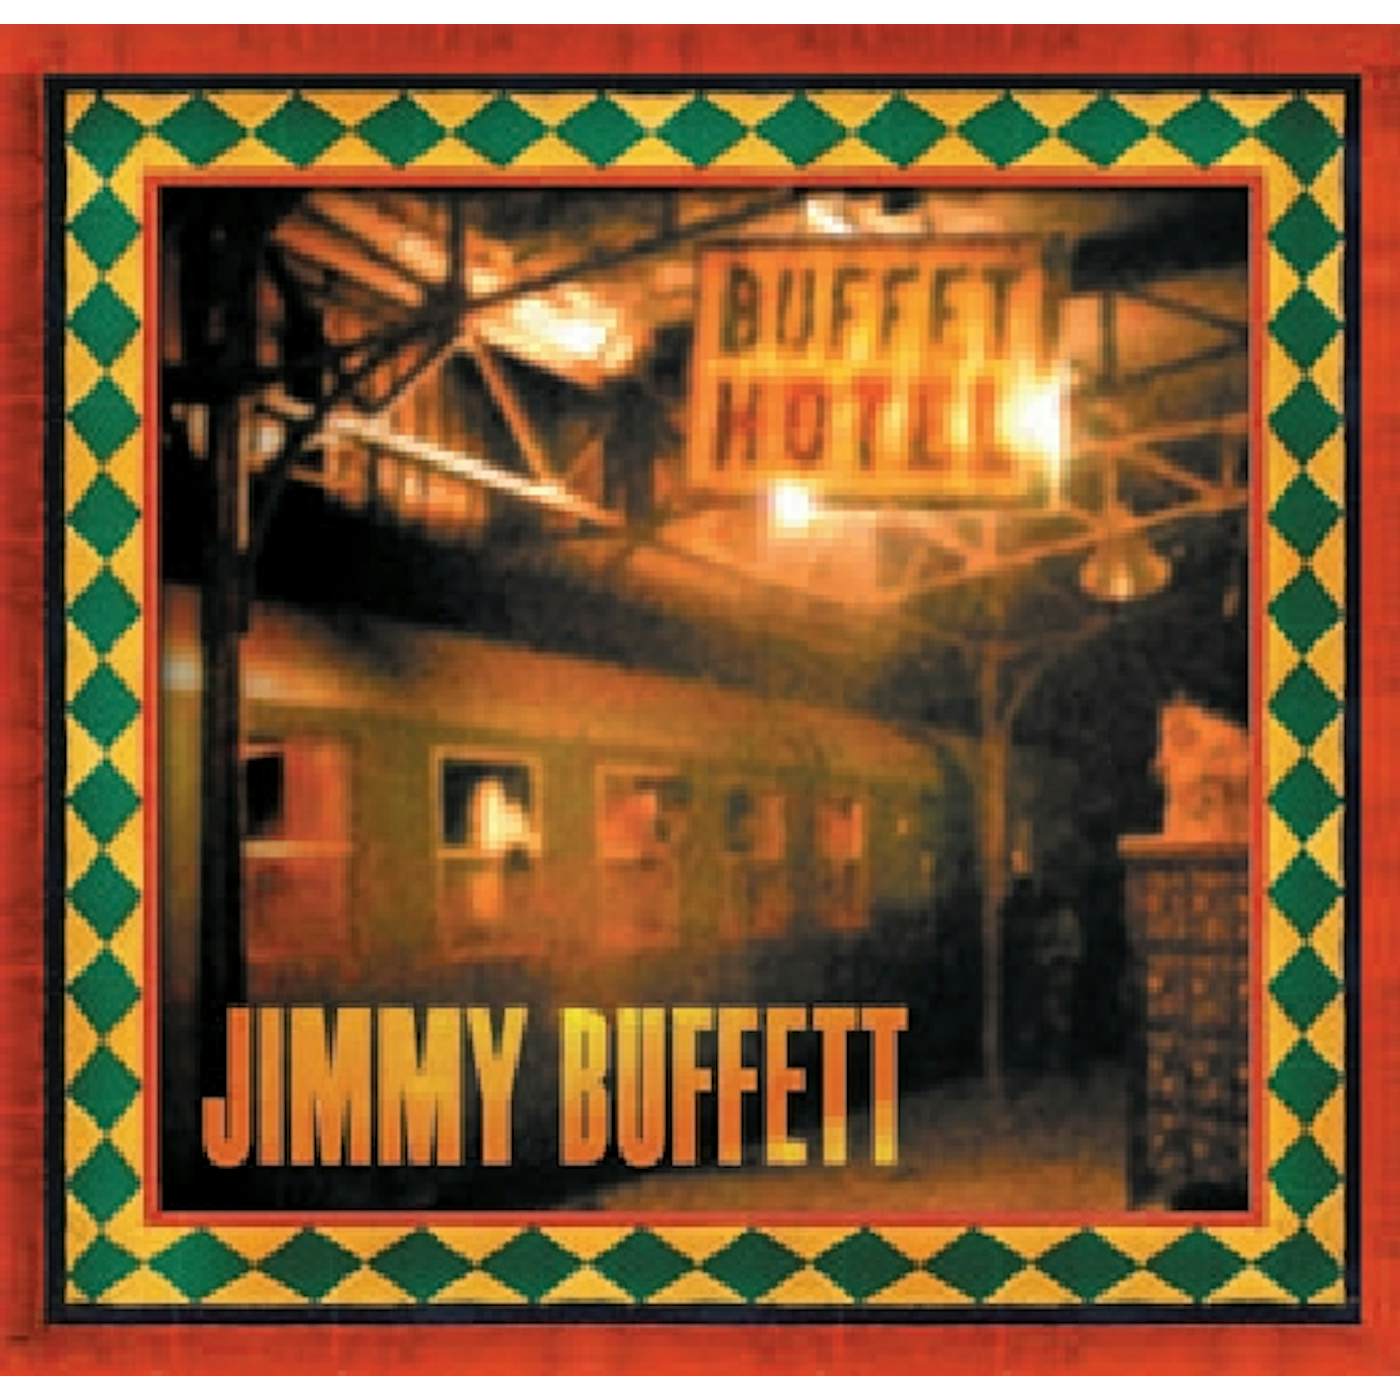 Jimmy Buffett BUFFET HOTEL CD